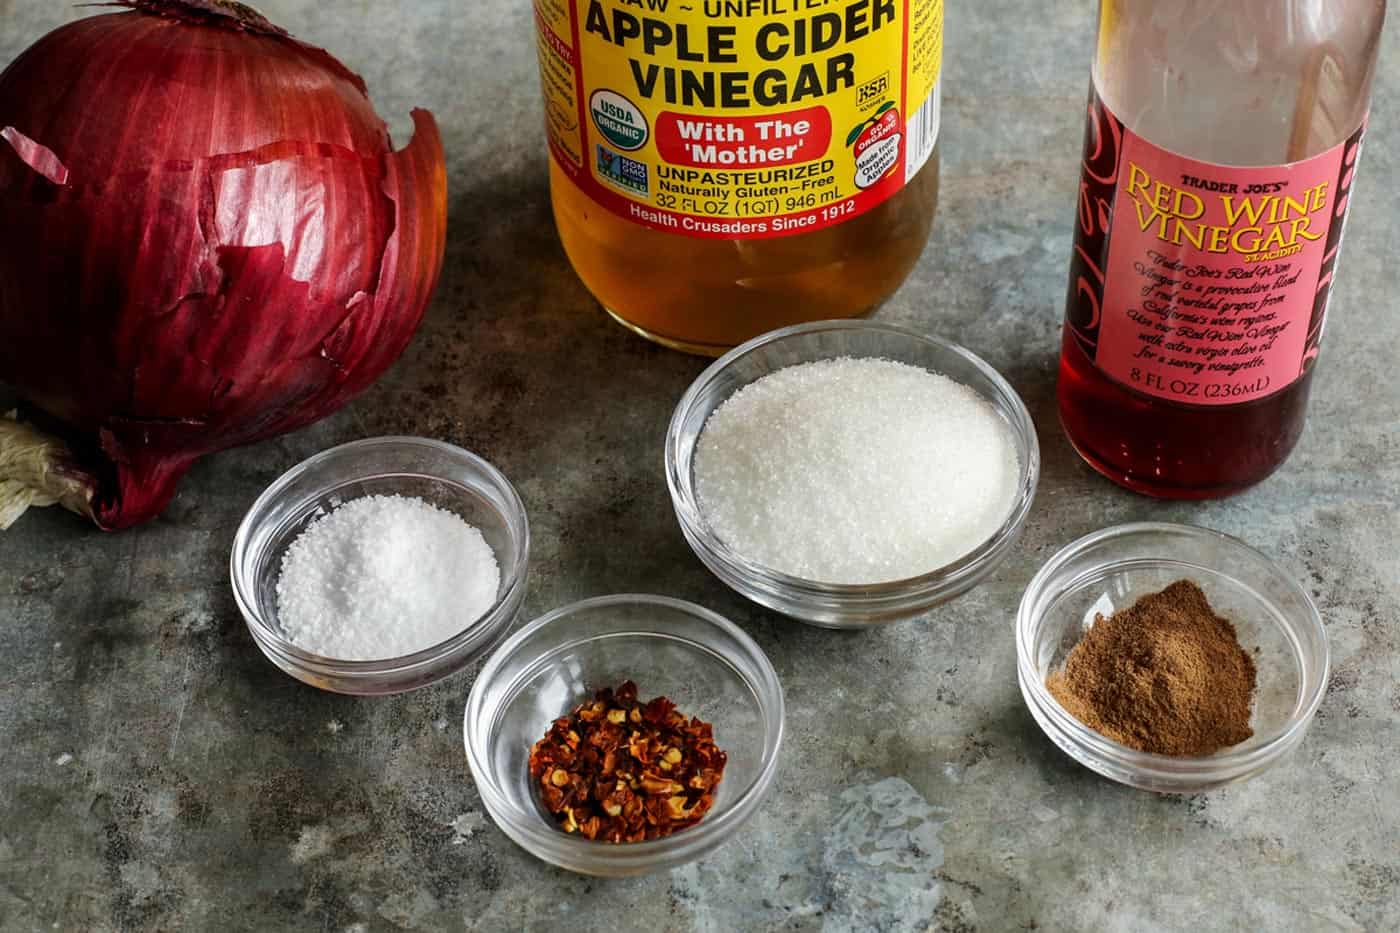 ingredients for pickled red onions - red onion, apple cider vinegar, red wine vinegar, salt, sugar, chili flakes, allspice